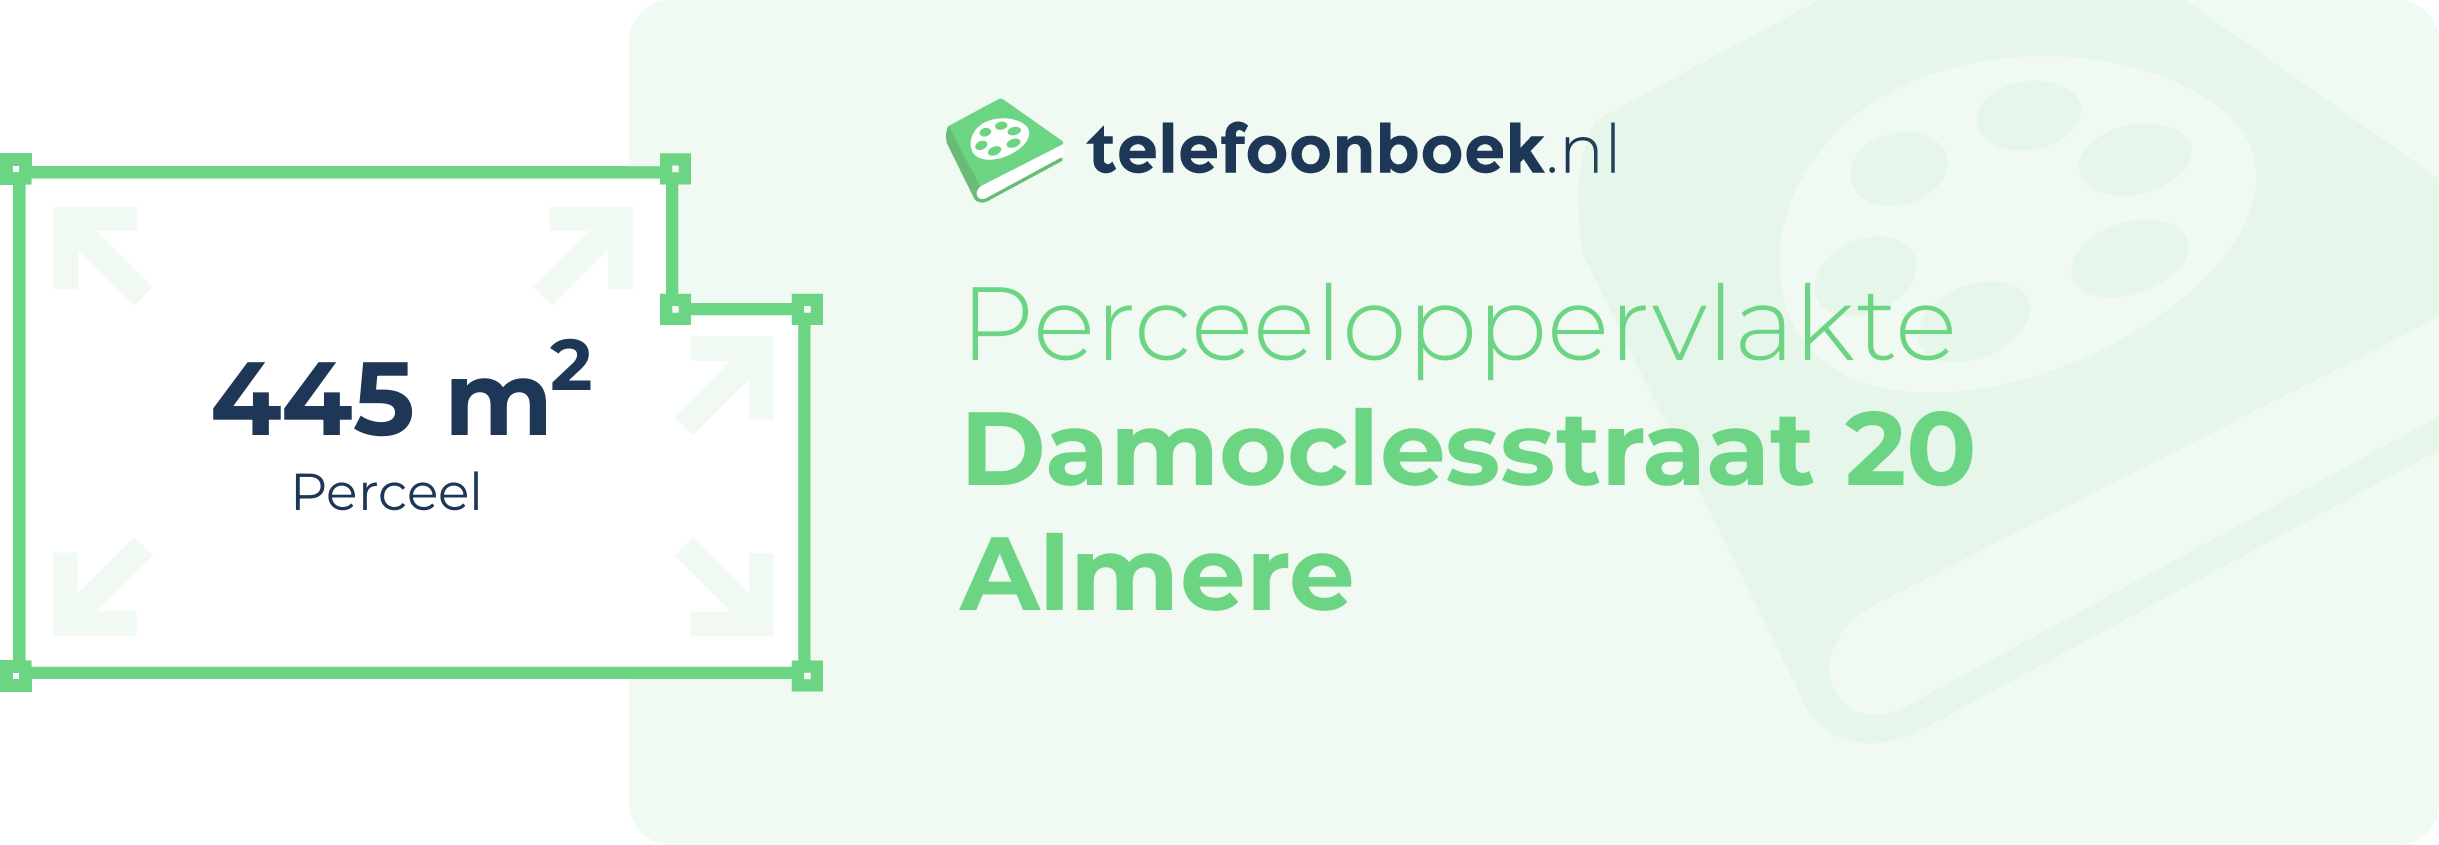 Perceeloppervlakte Damoclesstraat 20 Almere